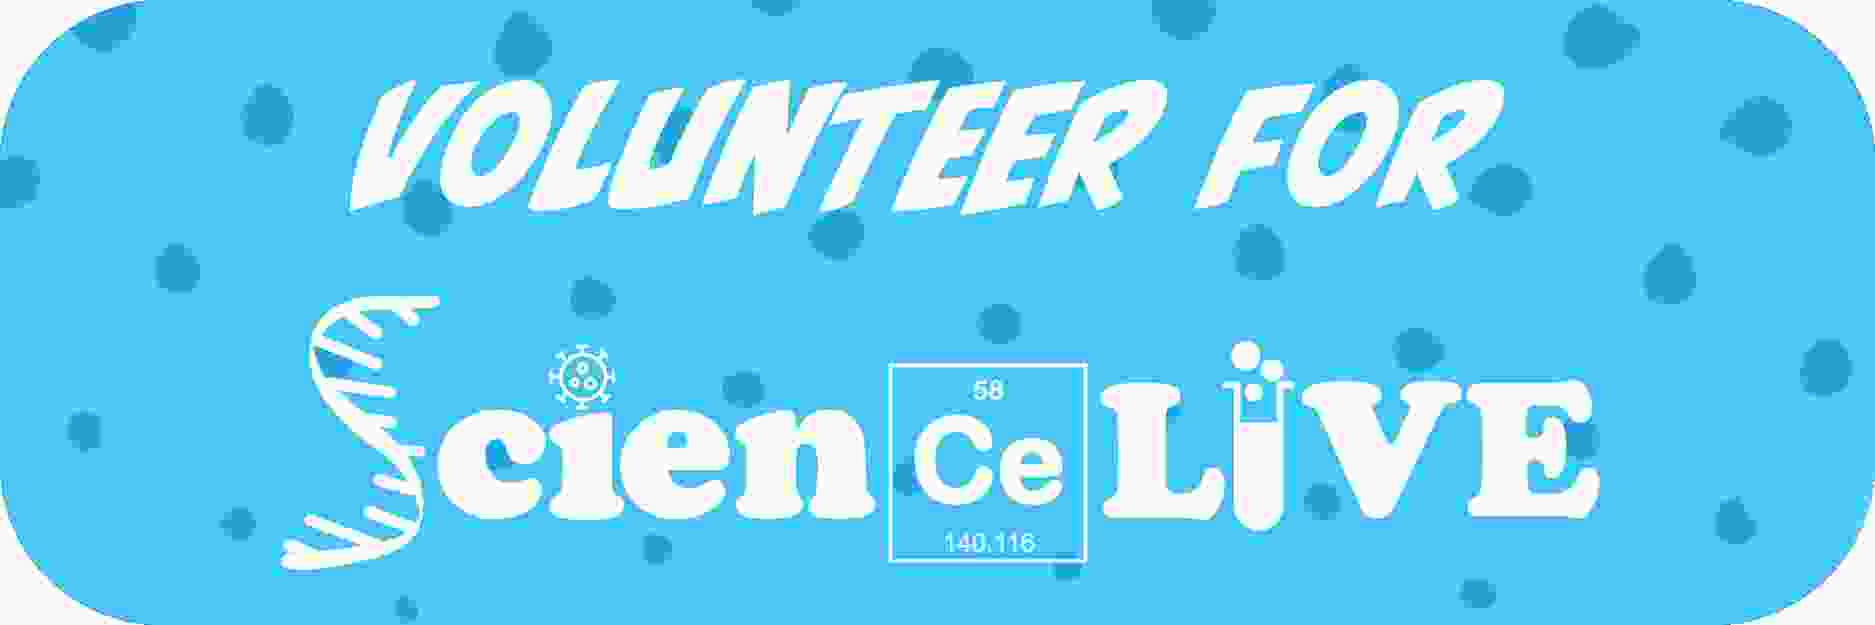 volunteer comic Button.png